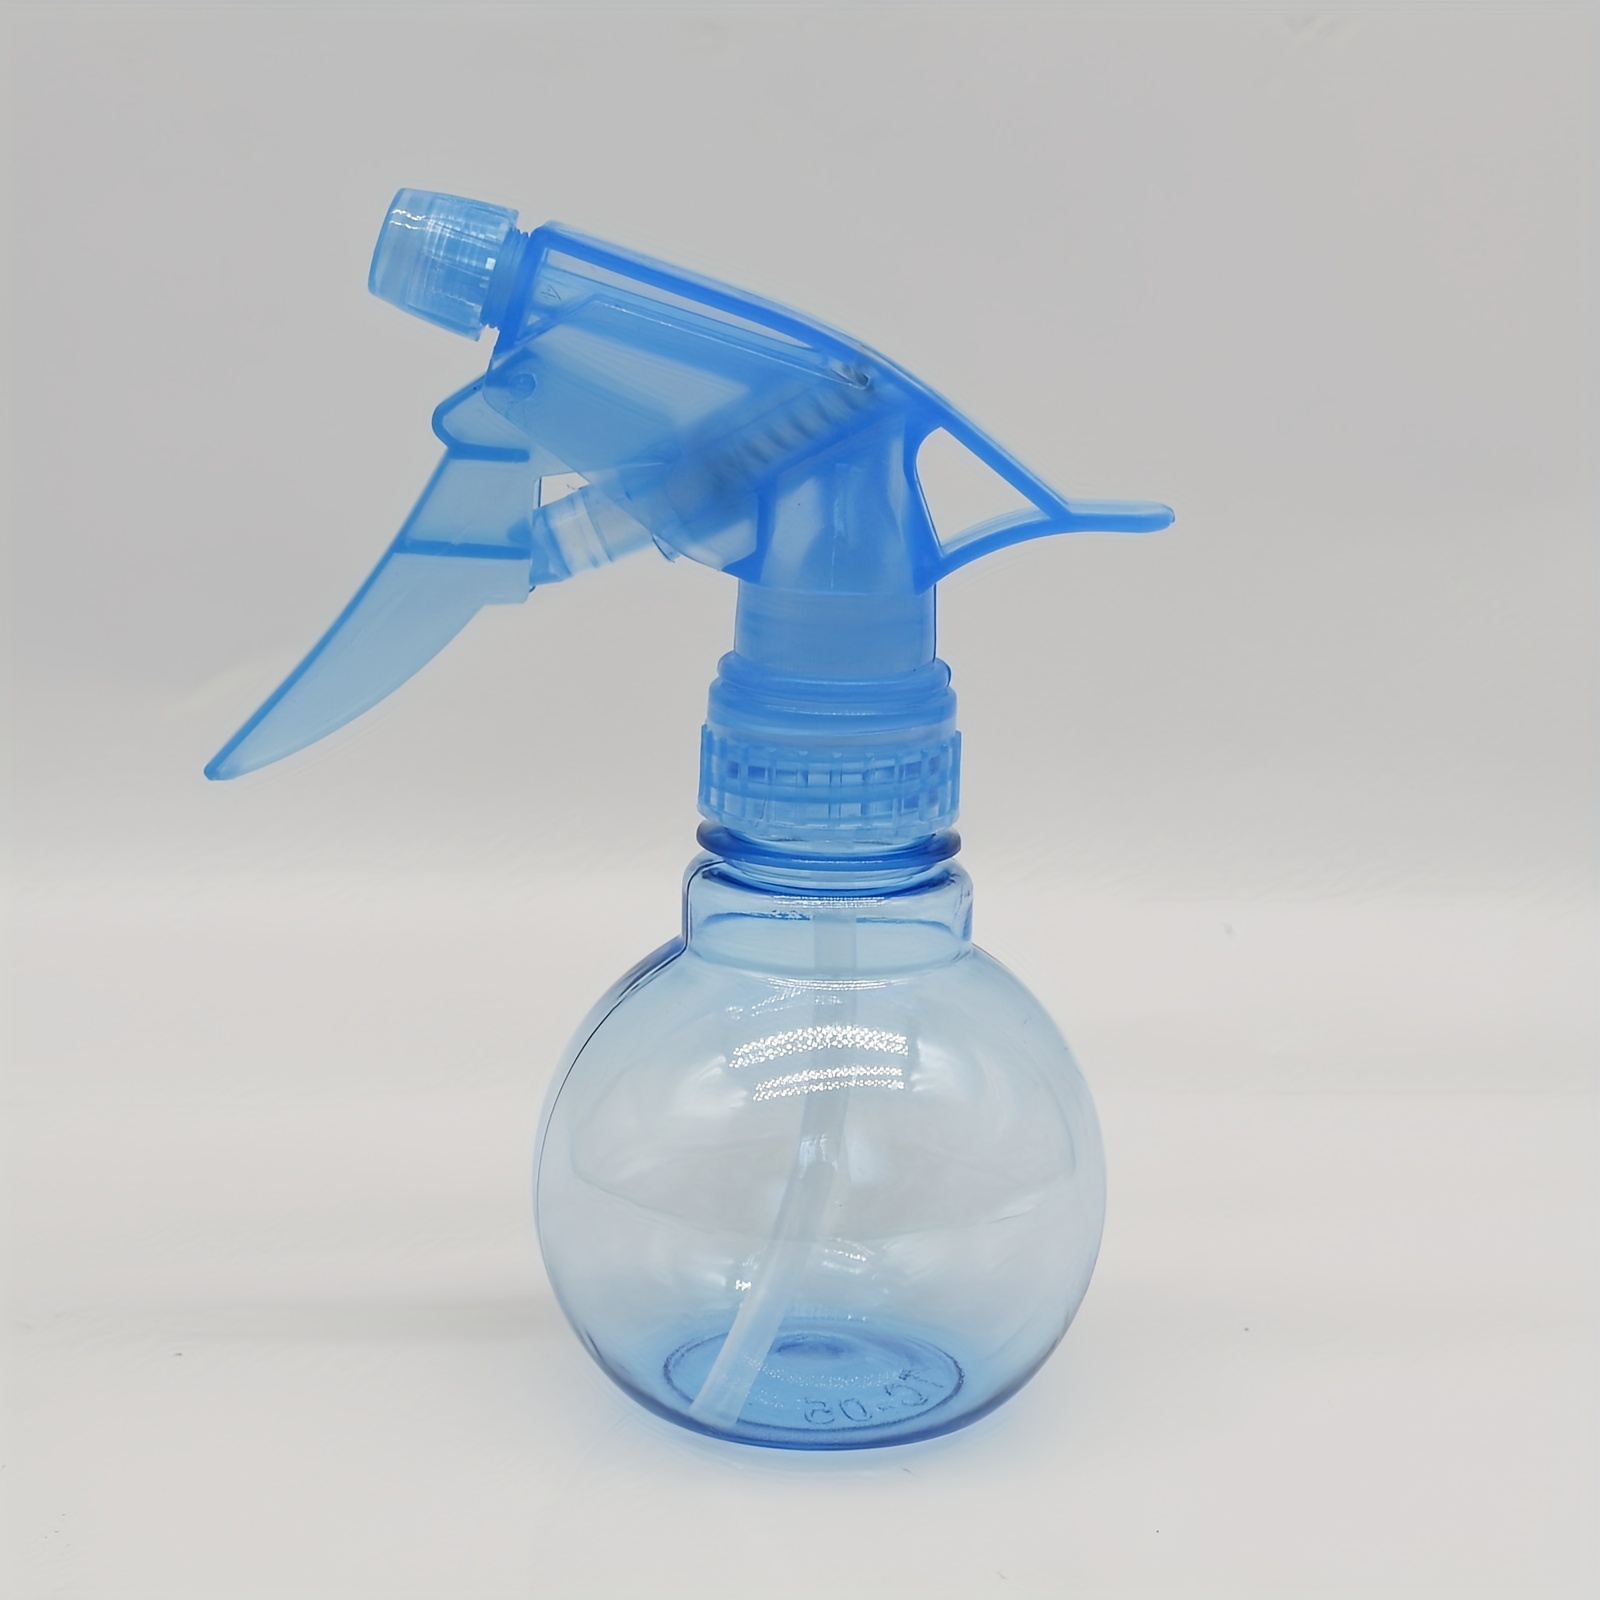 Pro Spray Bottle Water Sprayer Atomizer Vaporizer